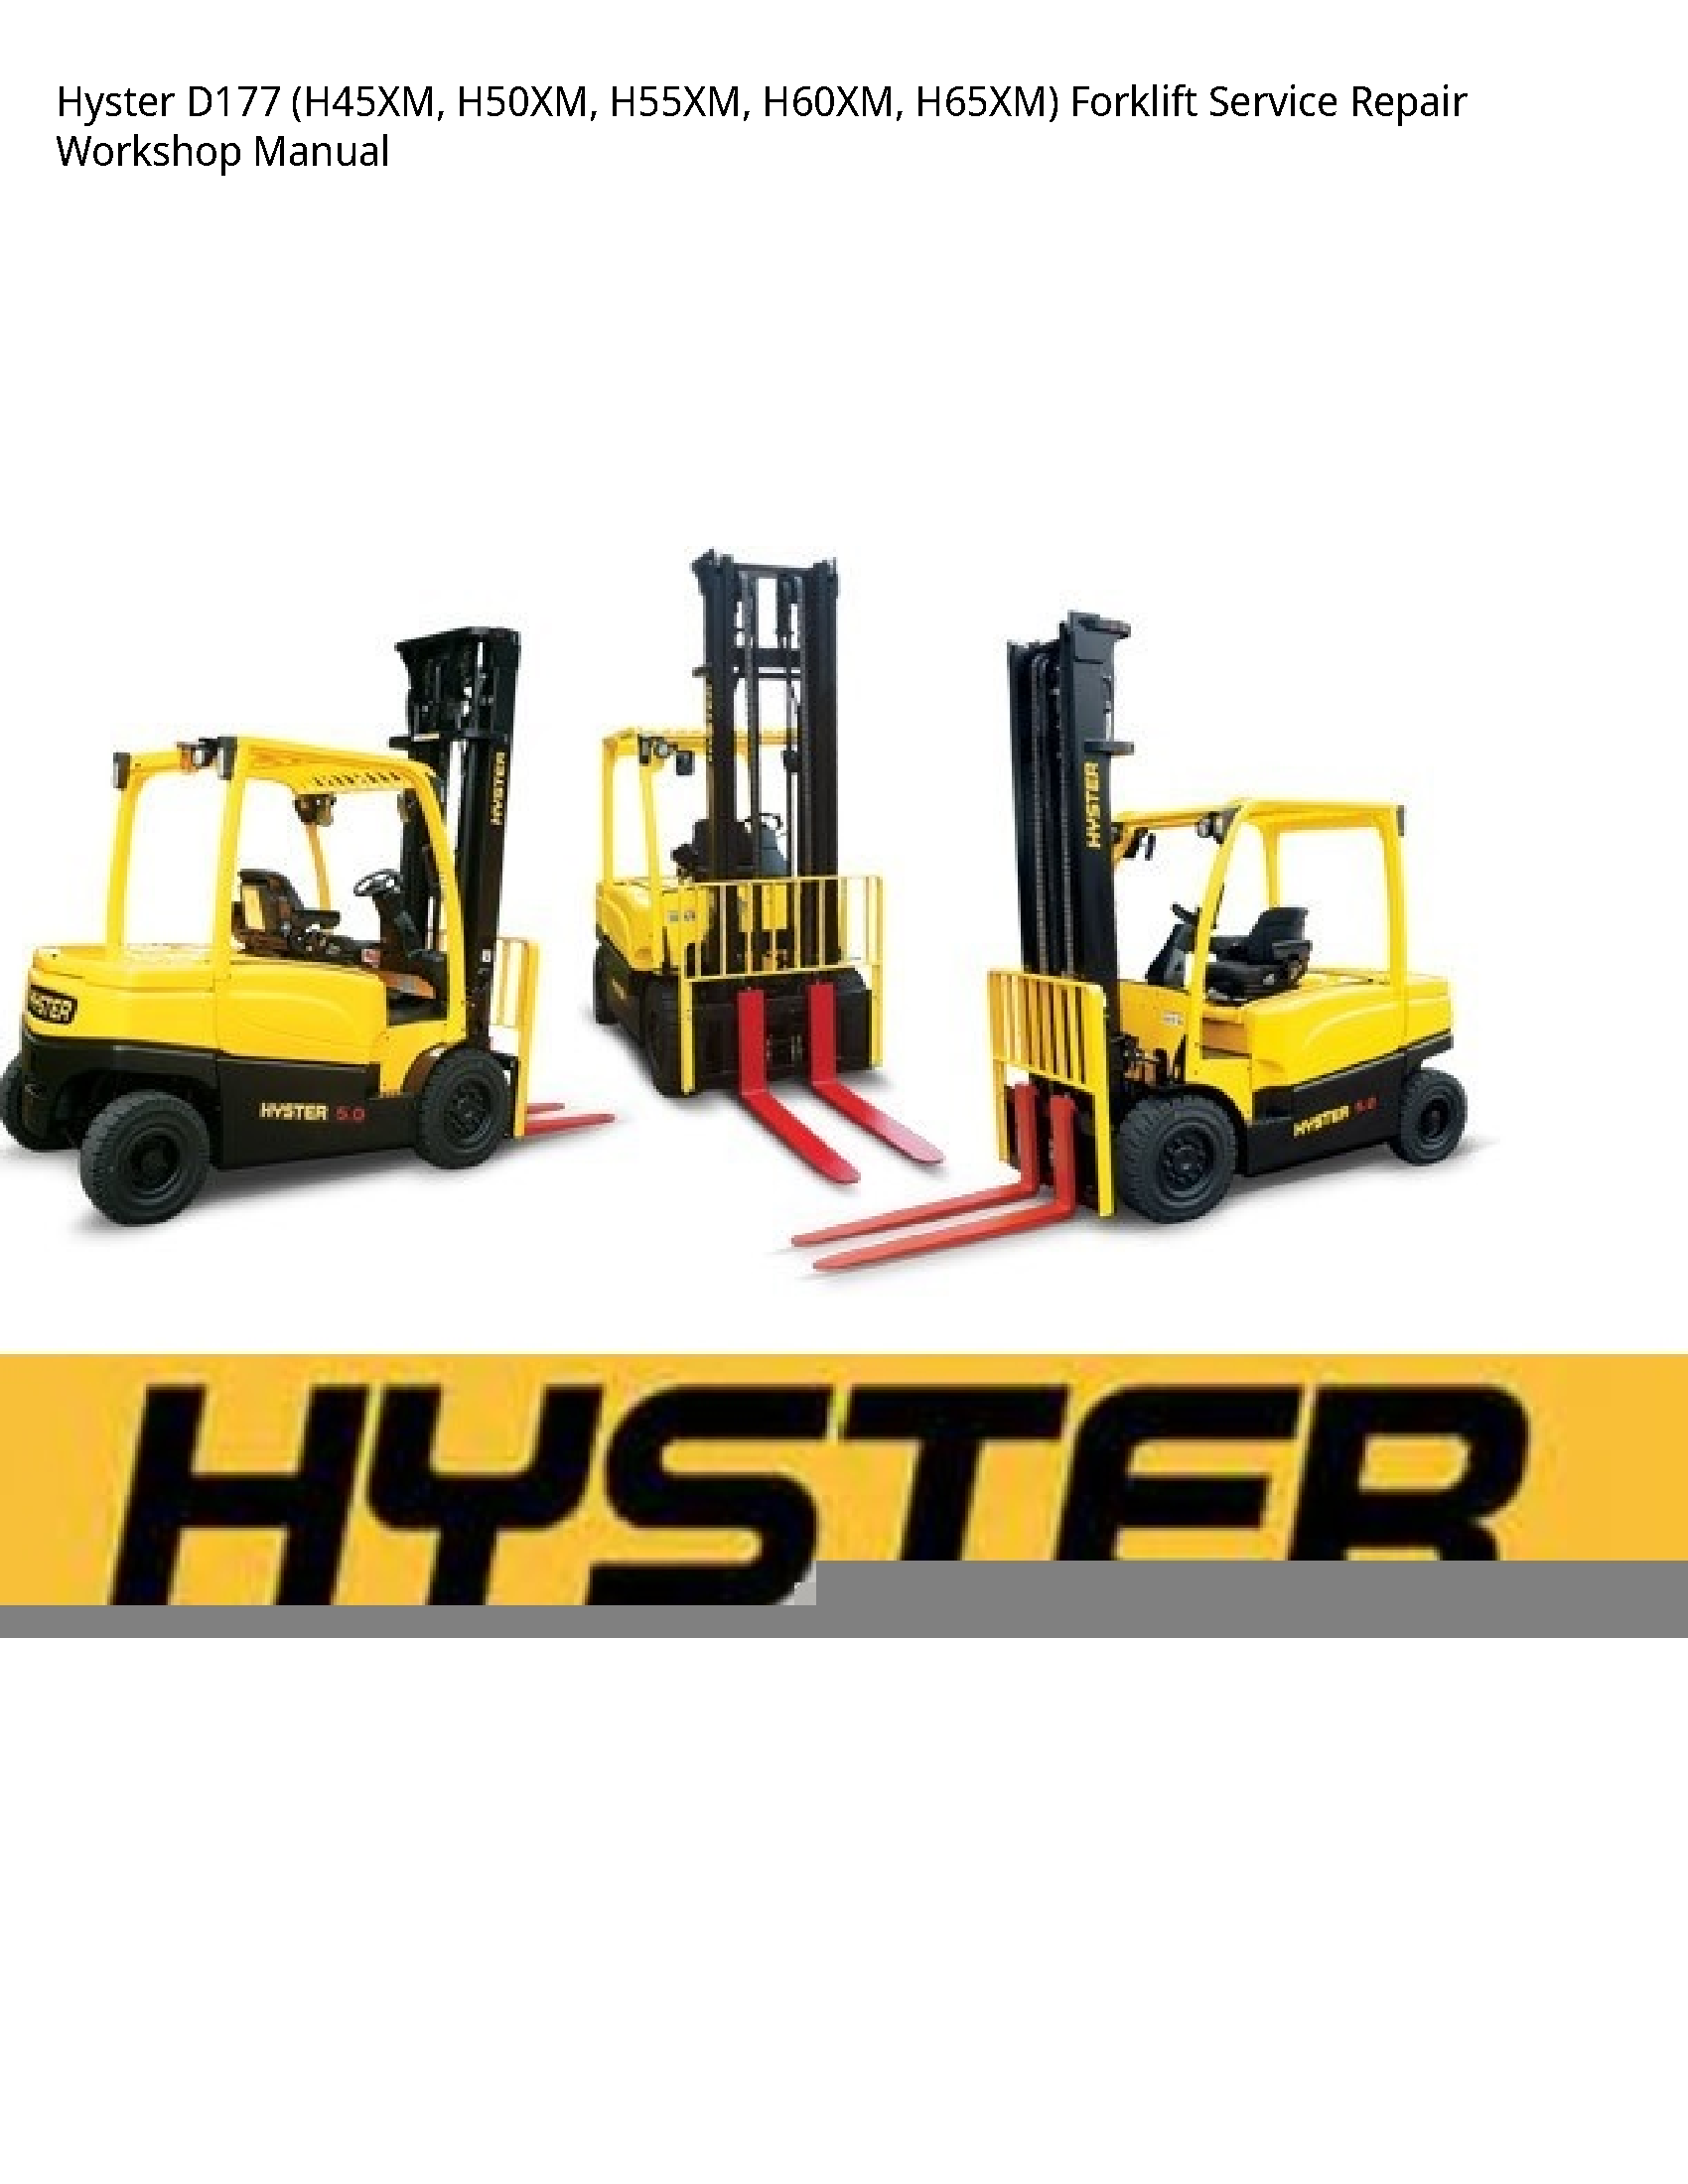 Hyster D177 Forklift manual